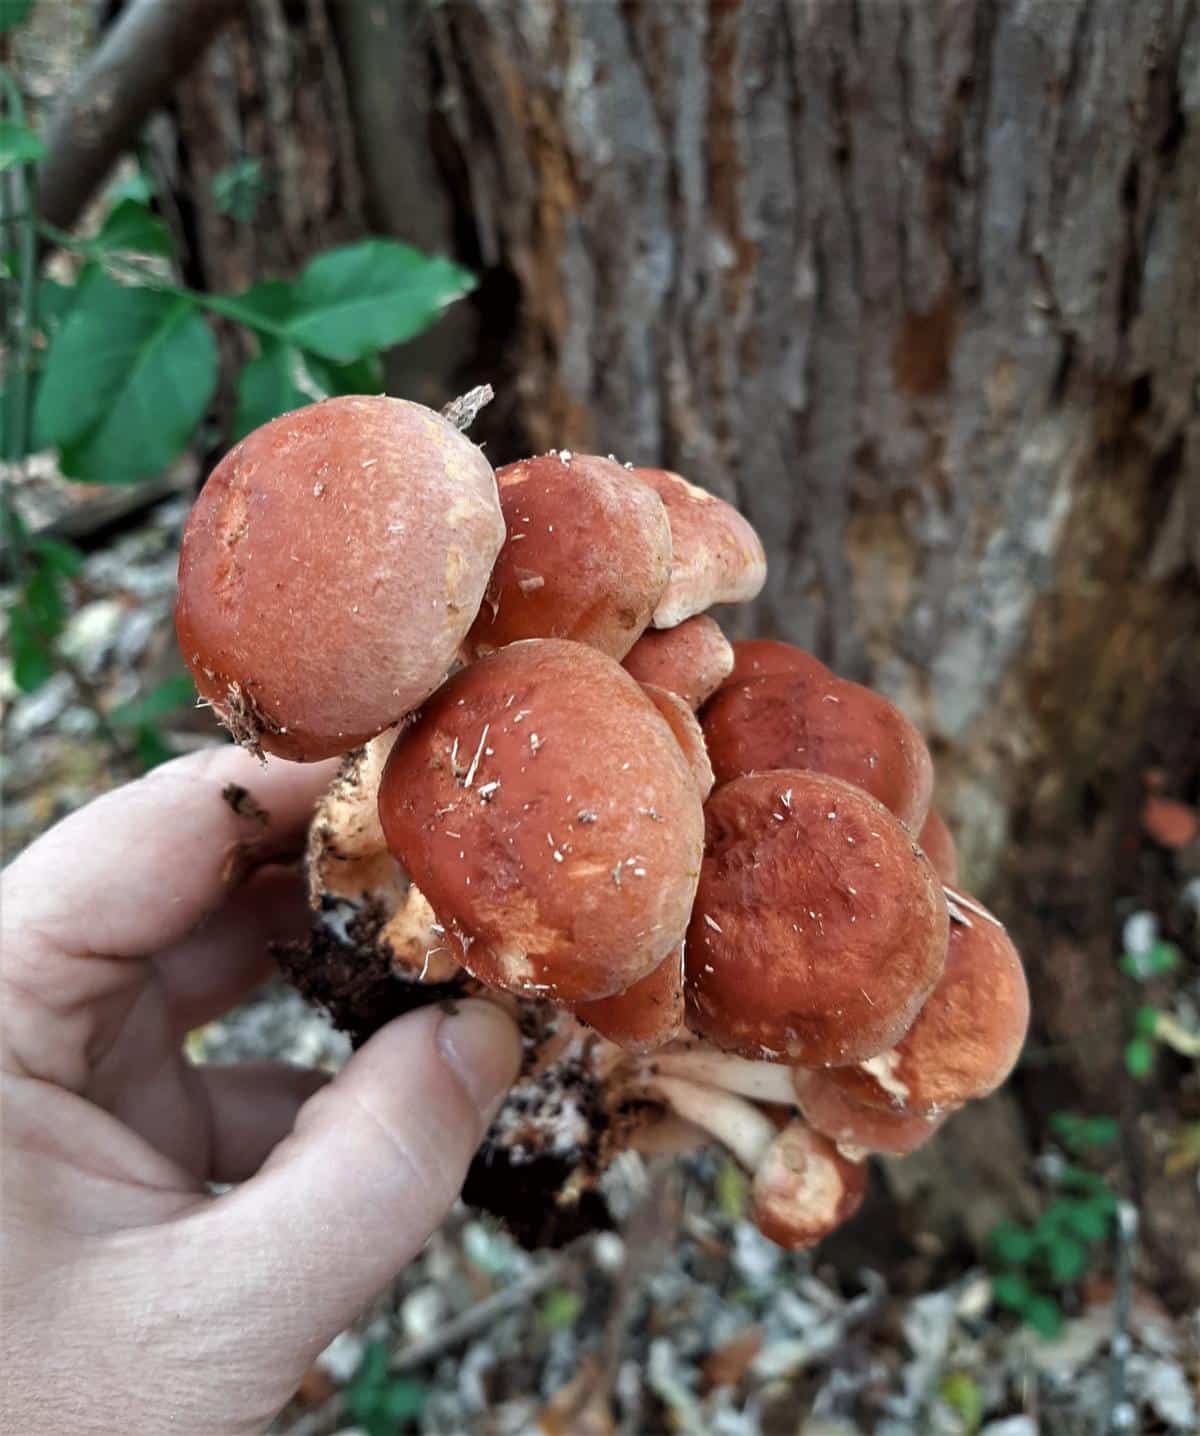 brick cap mushroom in hand